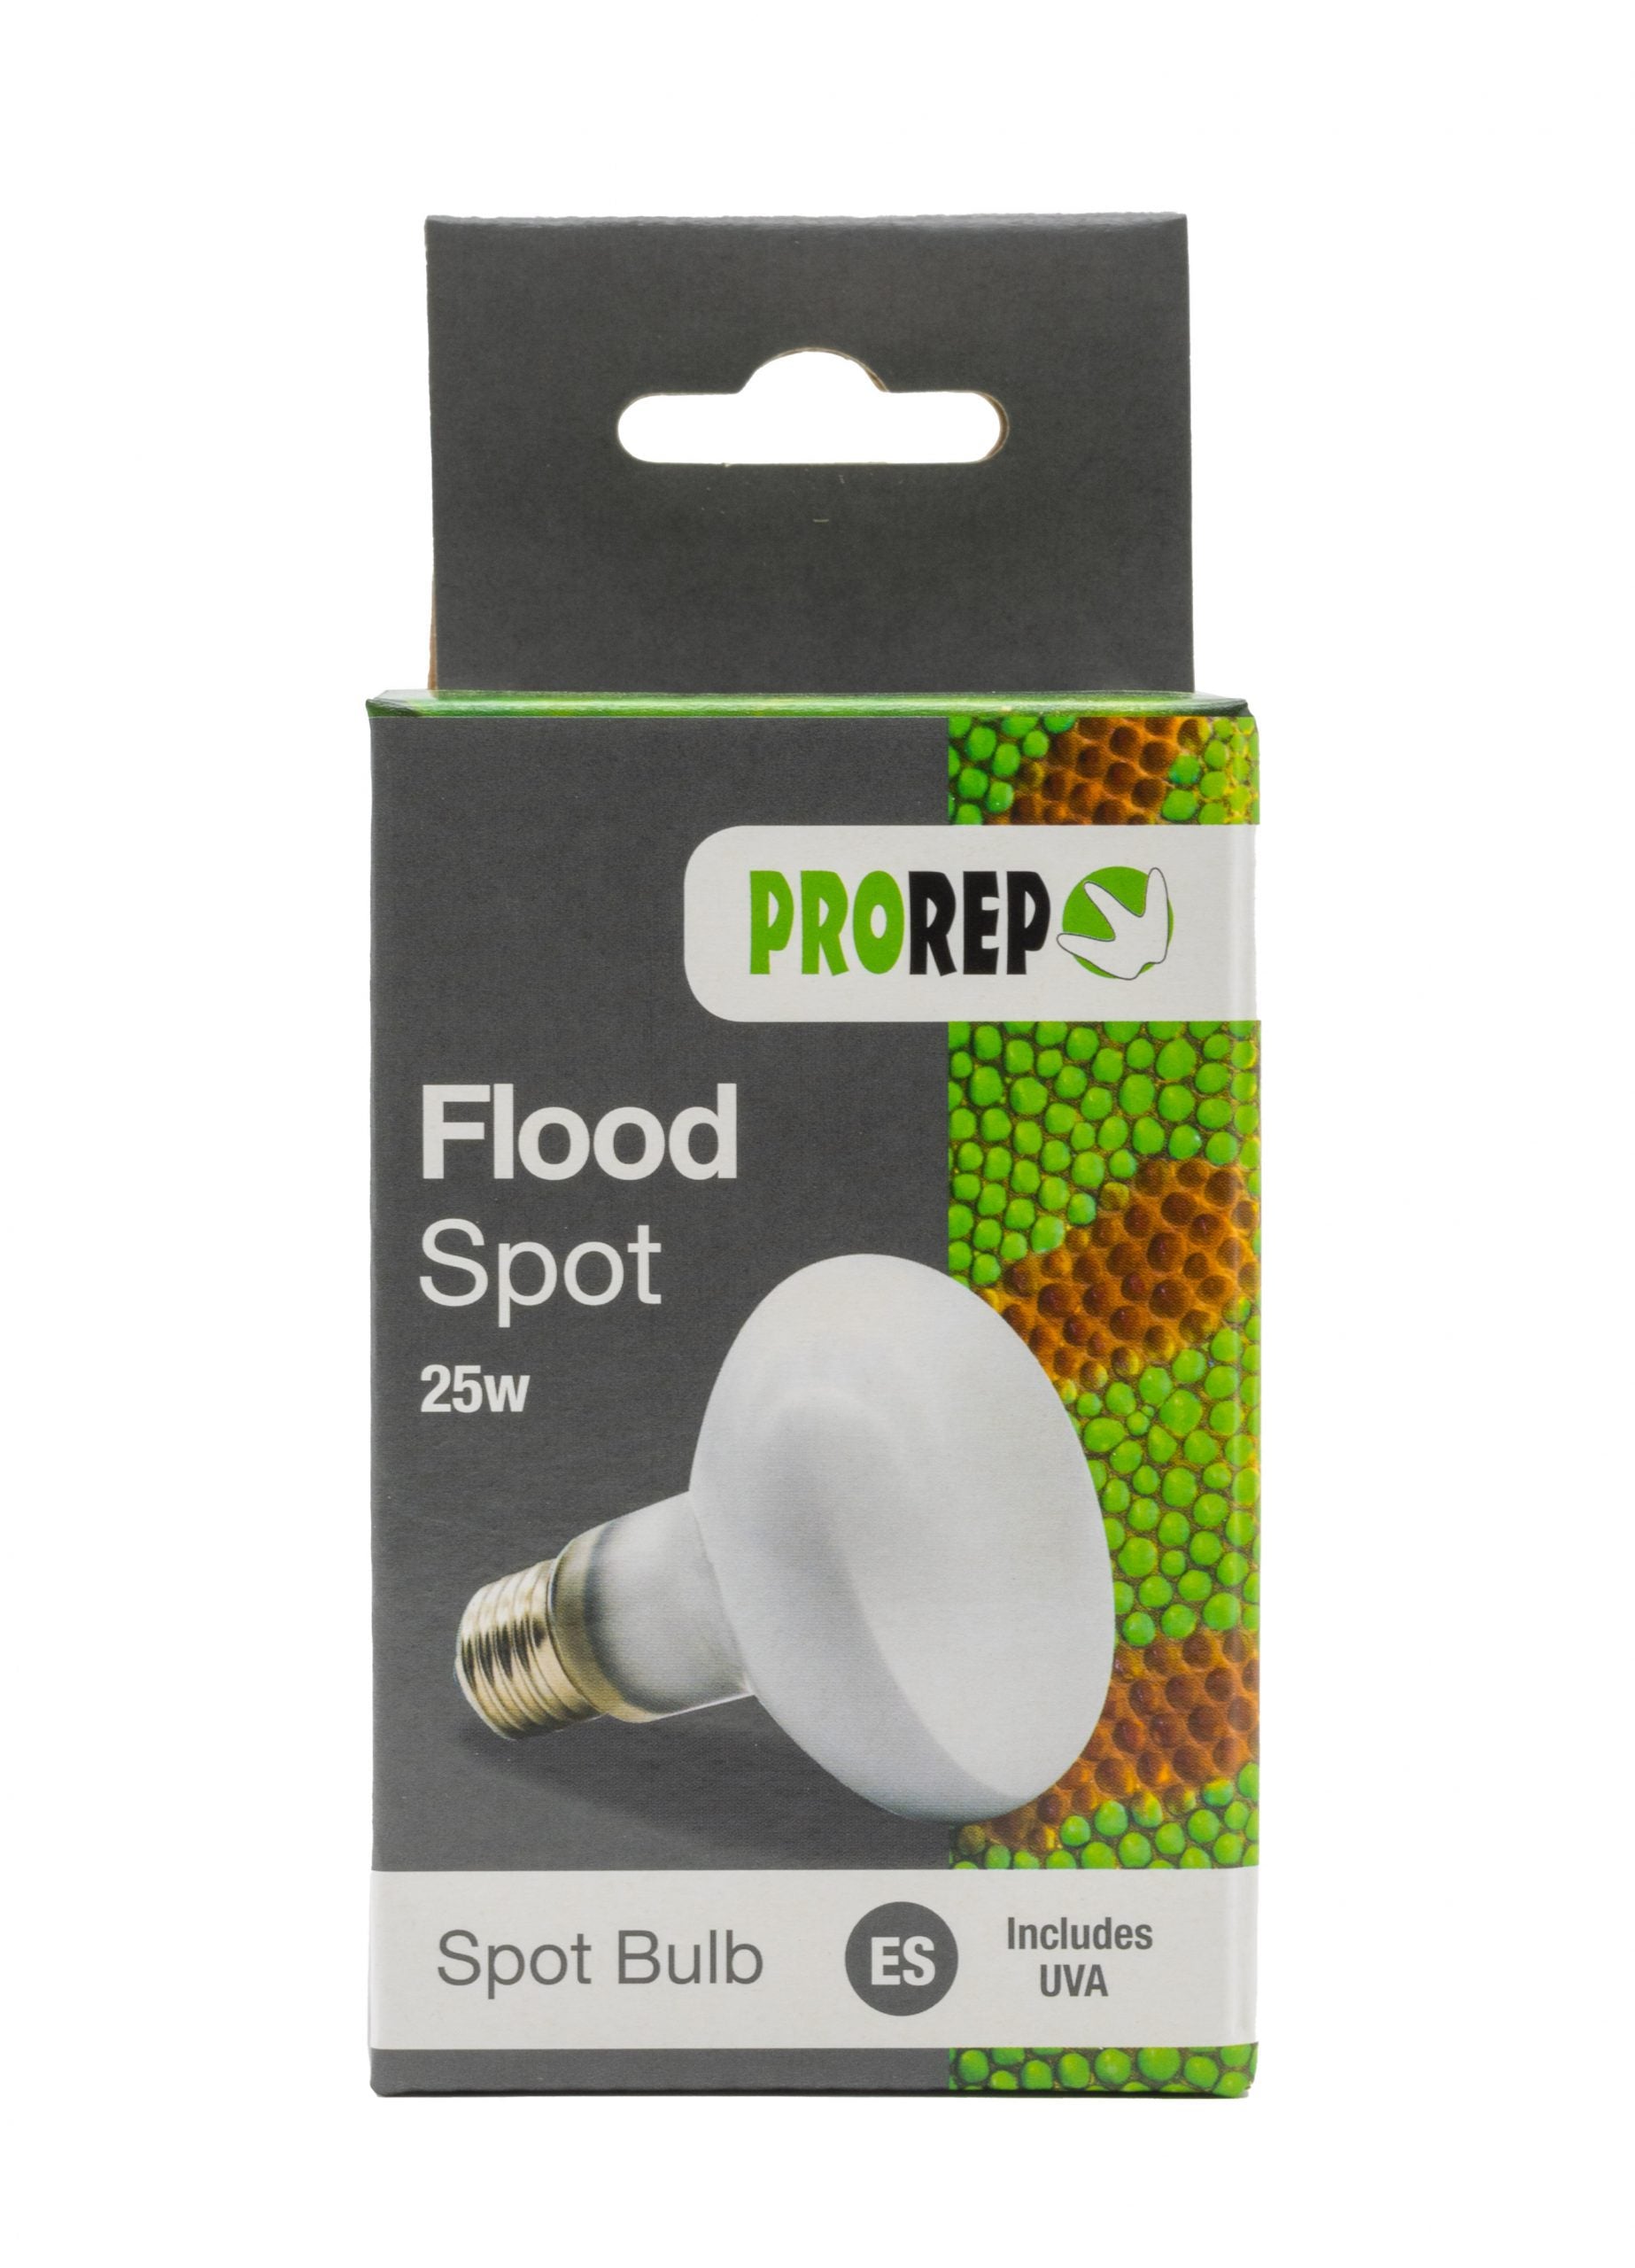 Flood Spot Lamp 25w ES